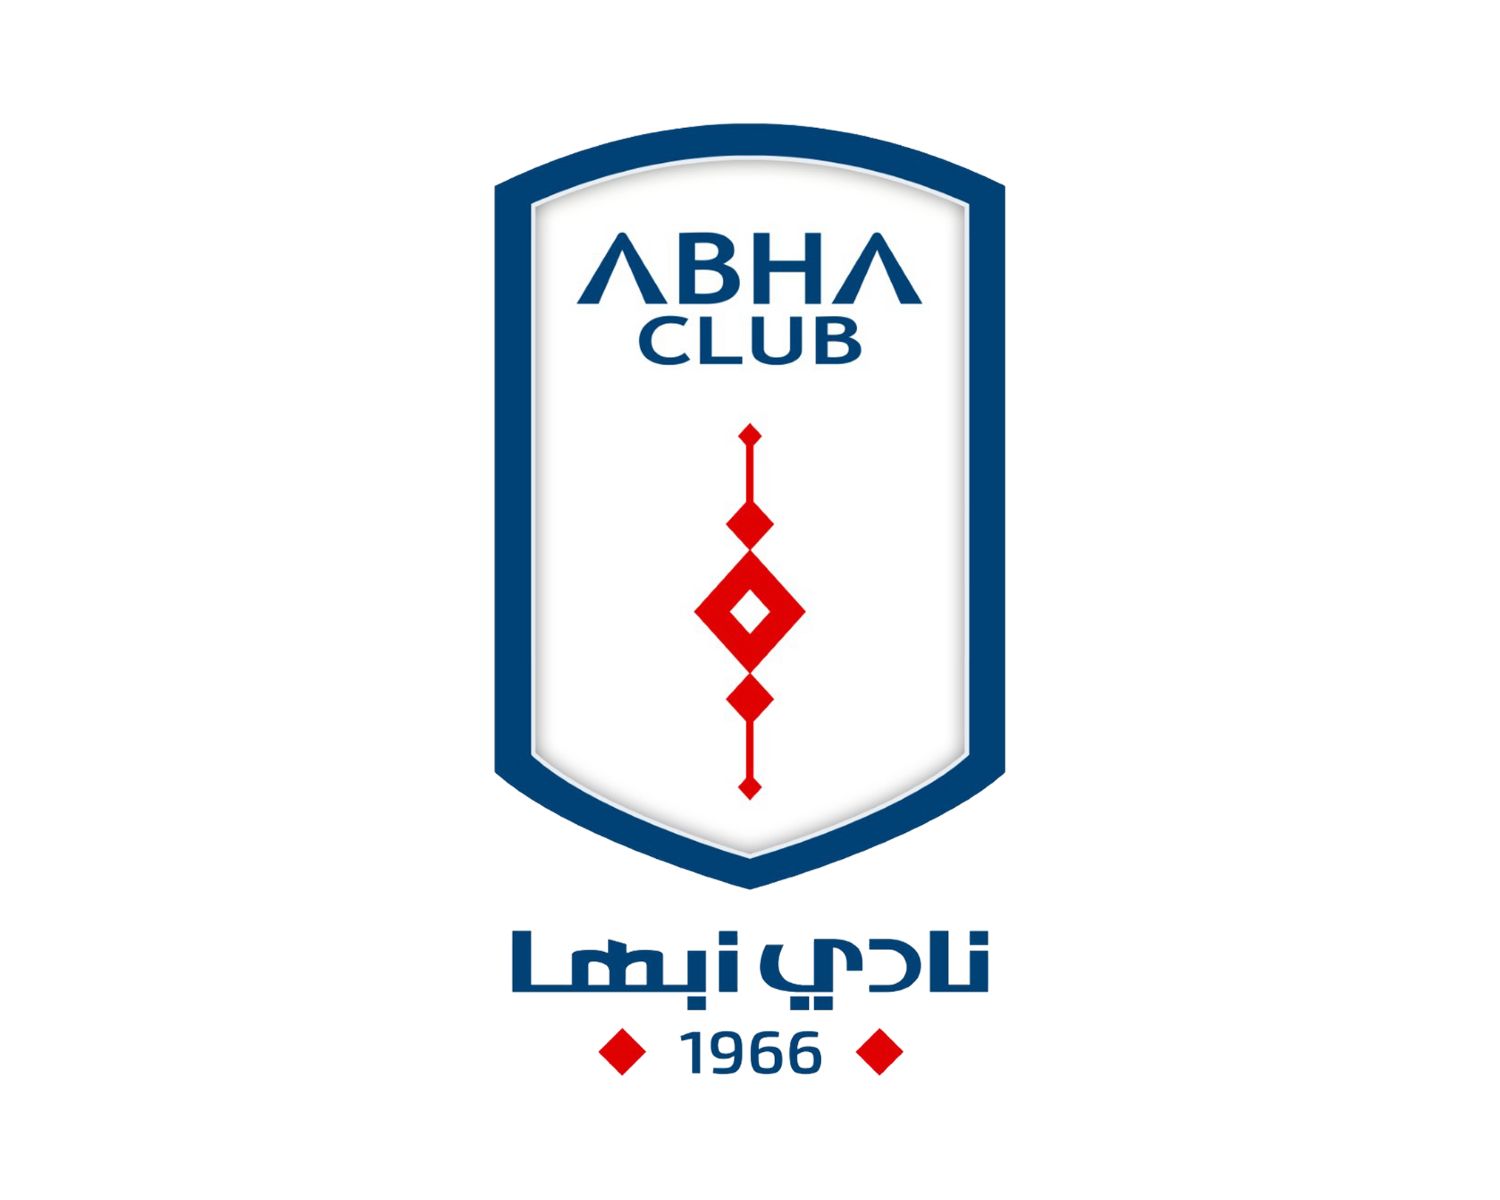 abha-club-24-football-club-facts